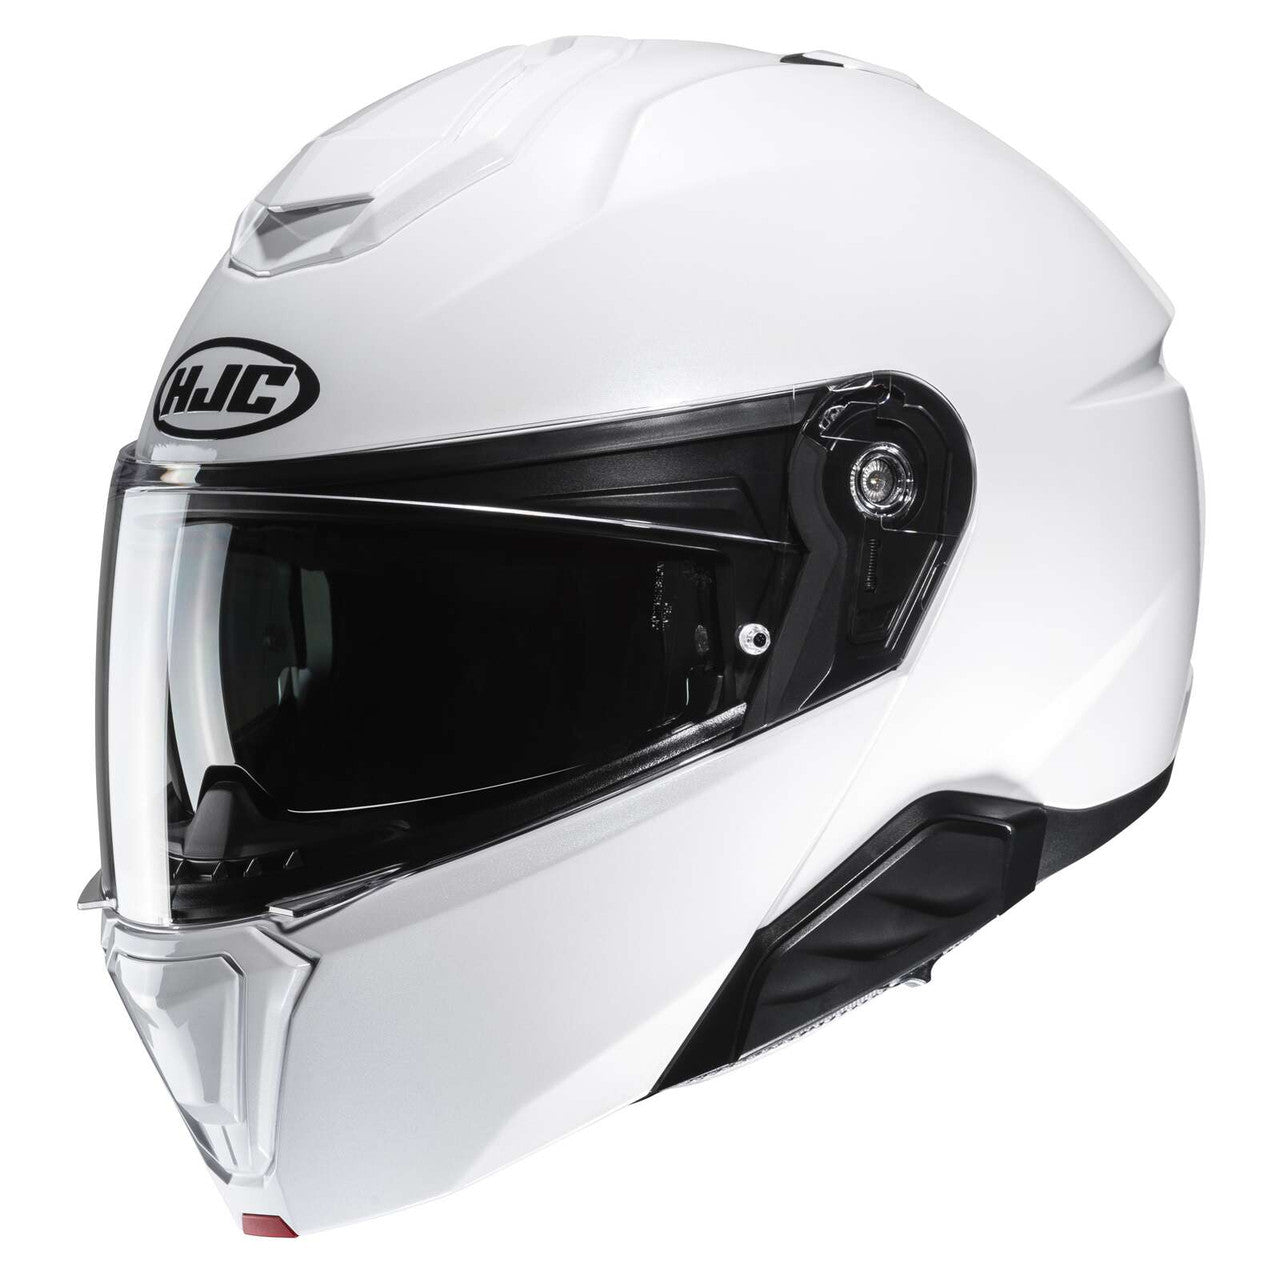 HJC-i91-Solid-Modular-Motorcycle-Helmet-White-Main